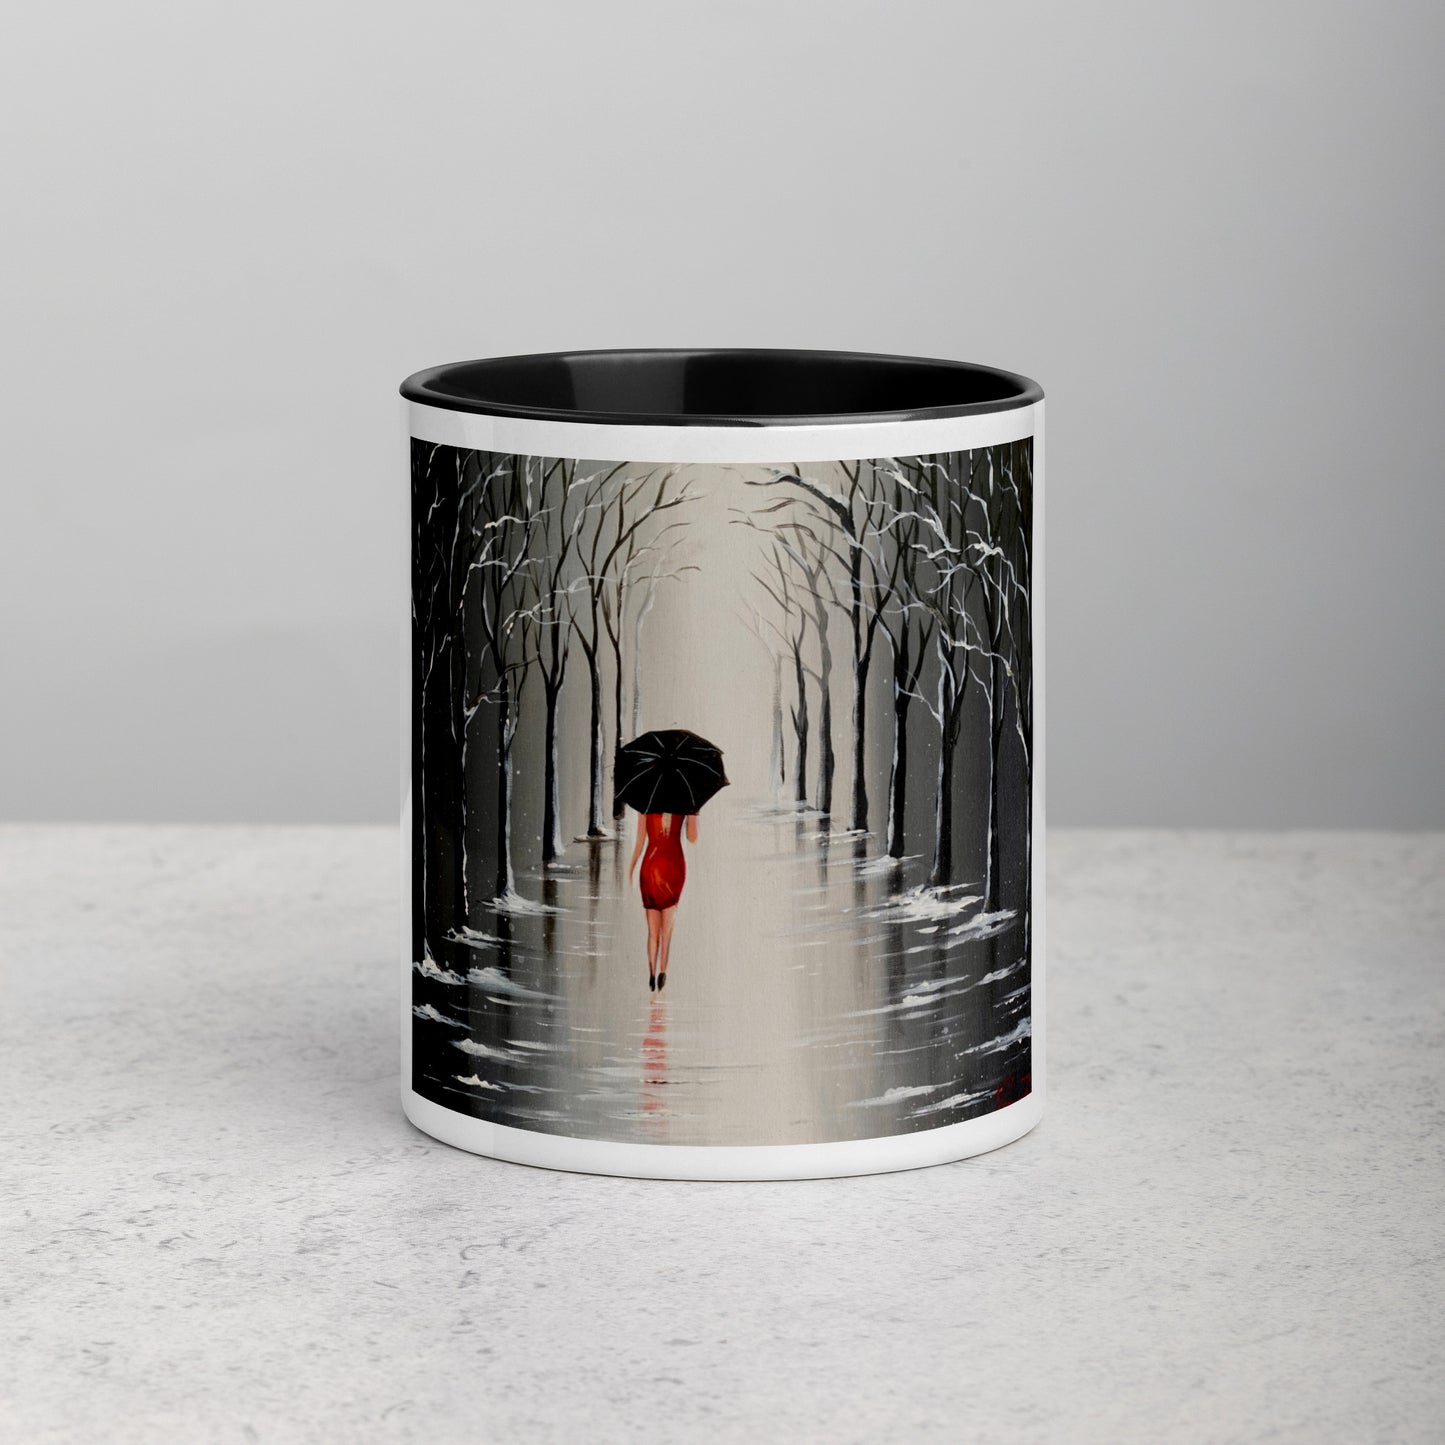 Inside color mug "Walking in the rain"